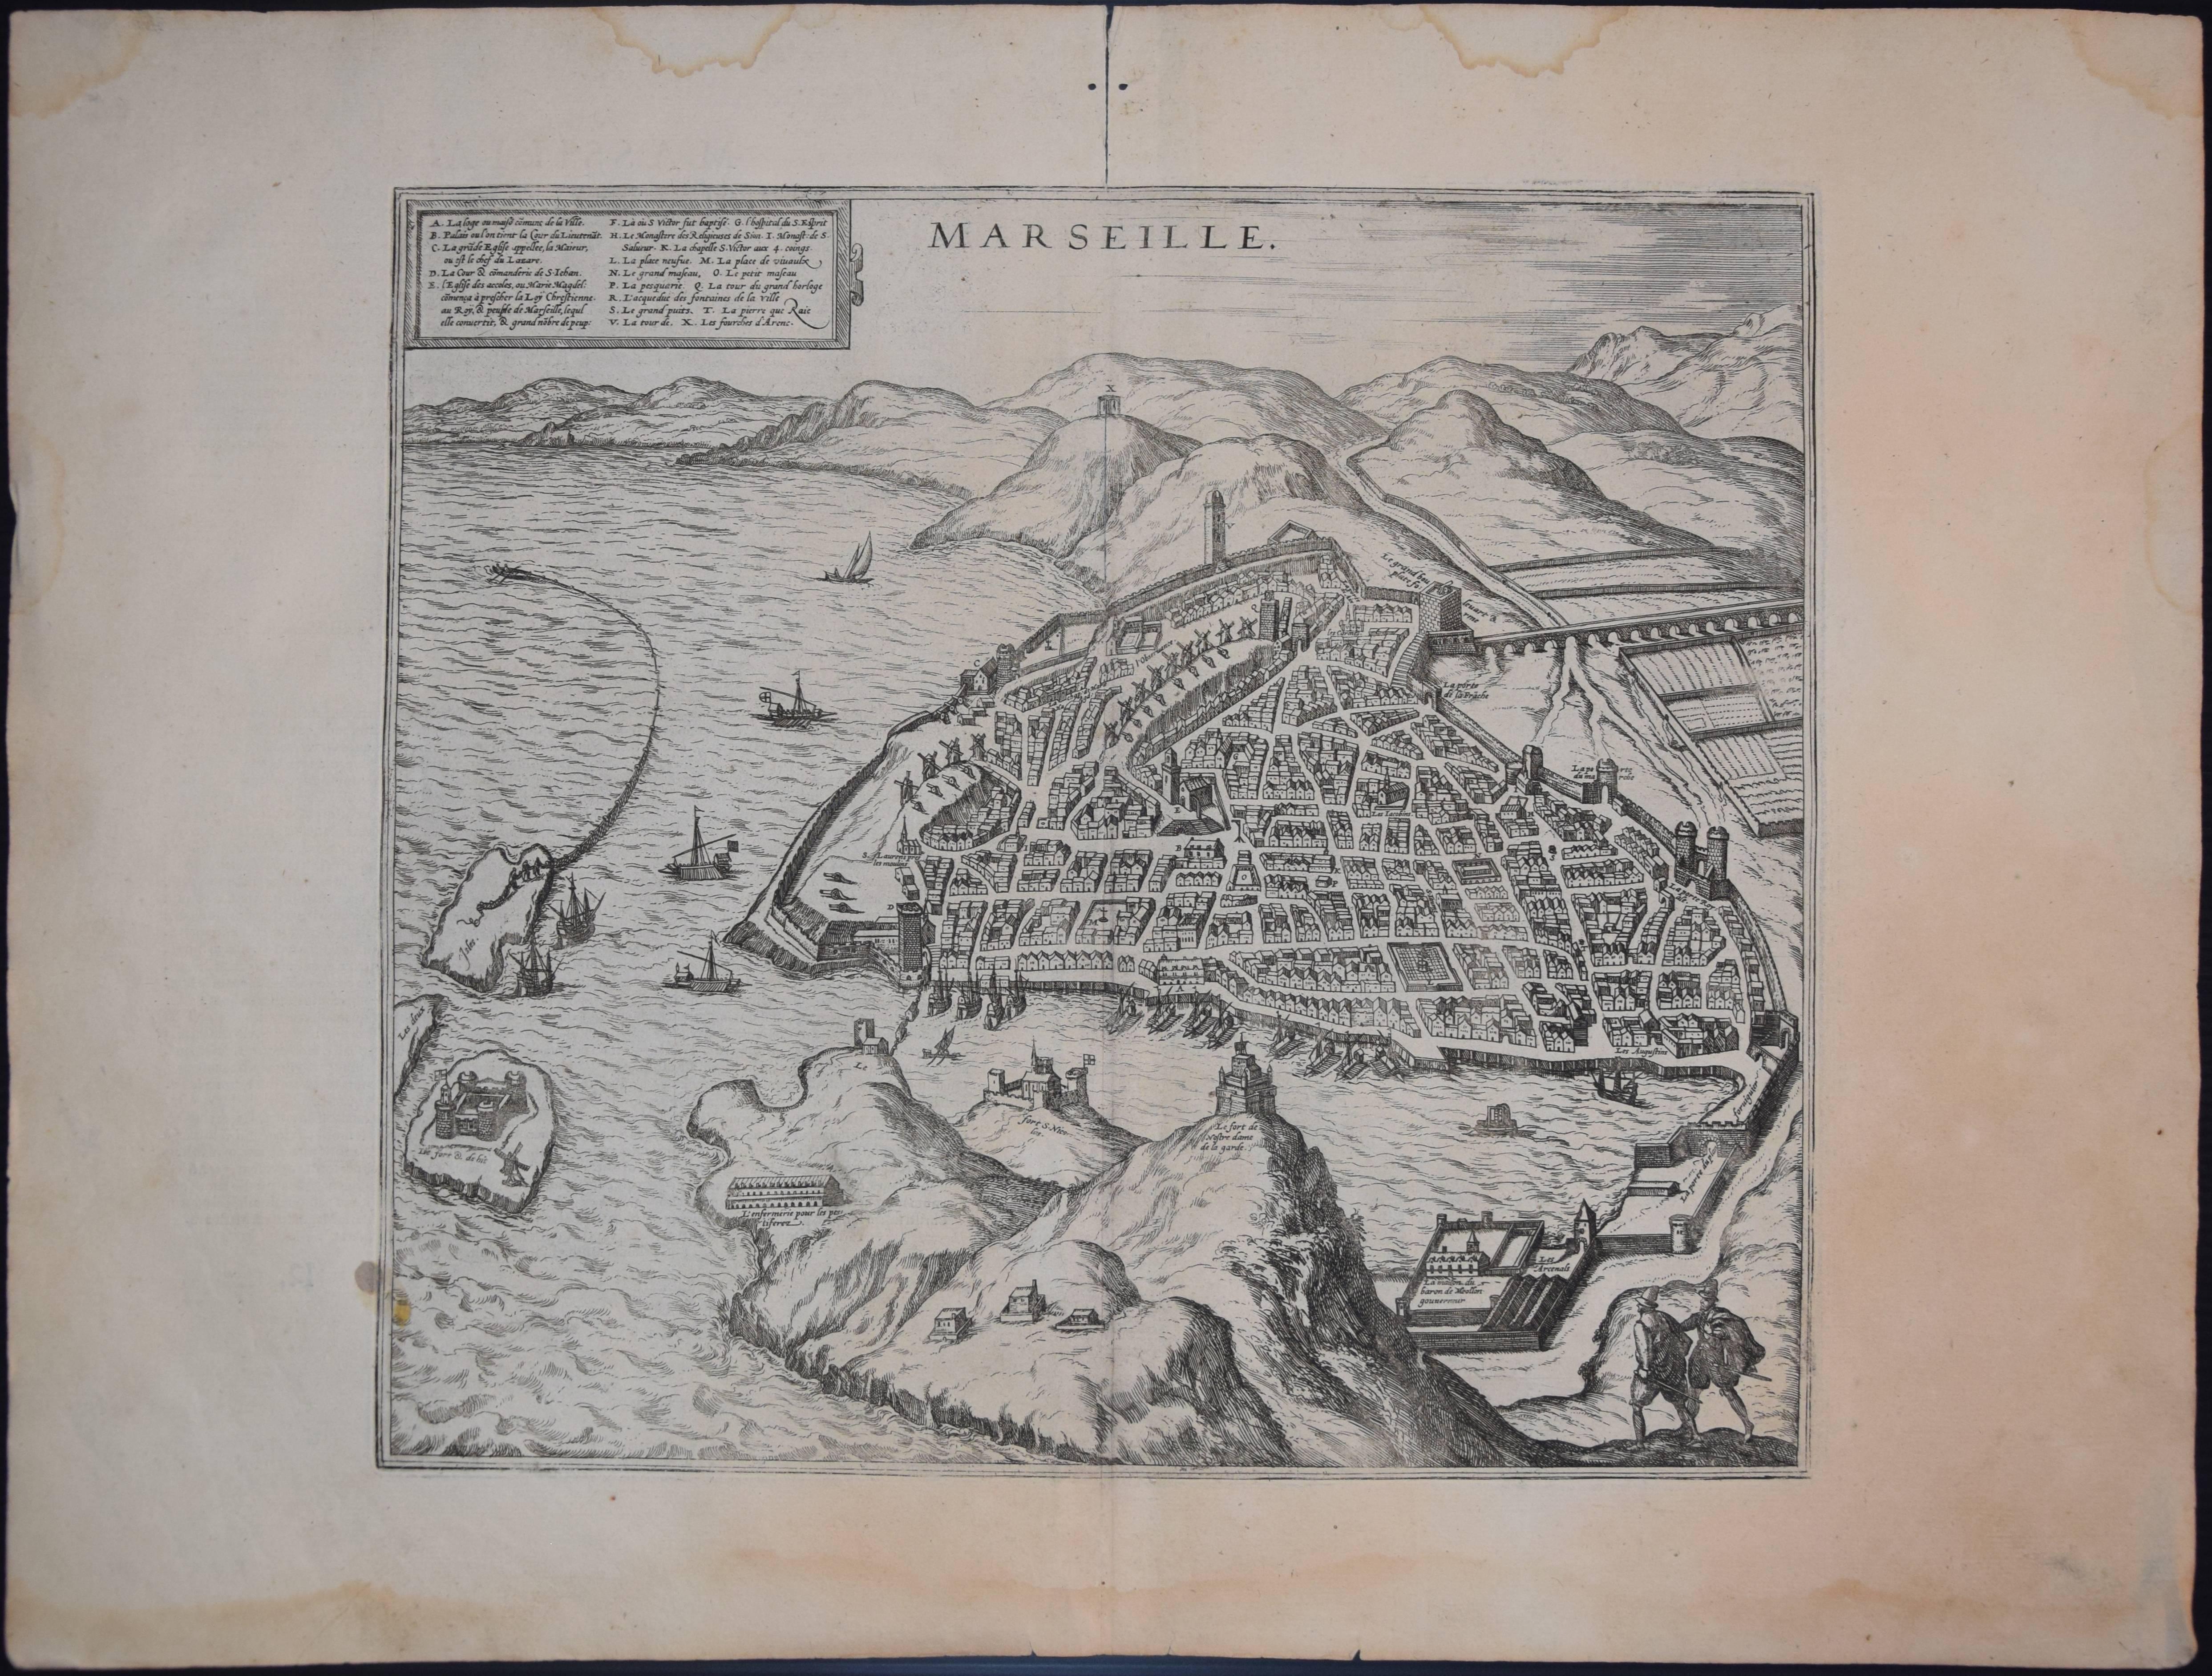 Frans Hogenberg Landscape Print - Marseille, Antique Map from "Civitates Orbis Terrarum"